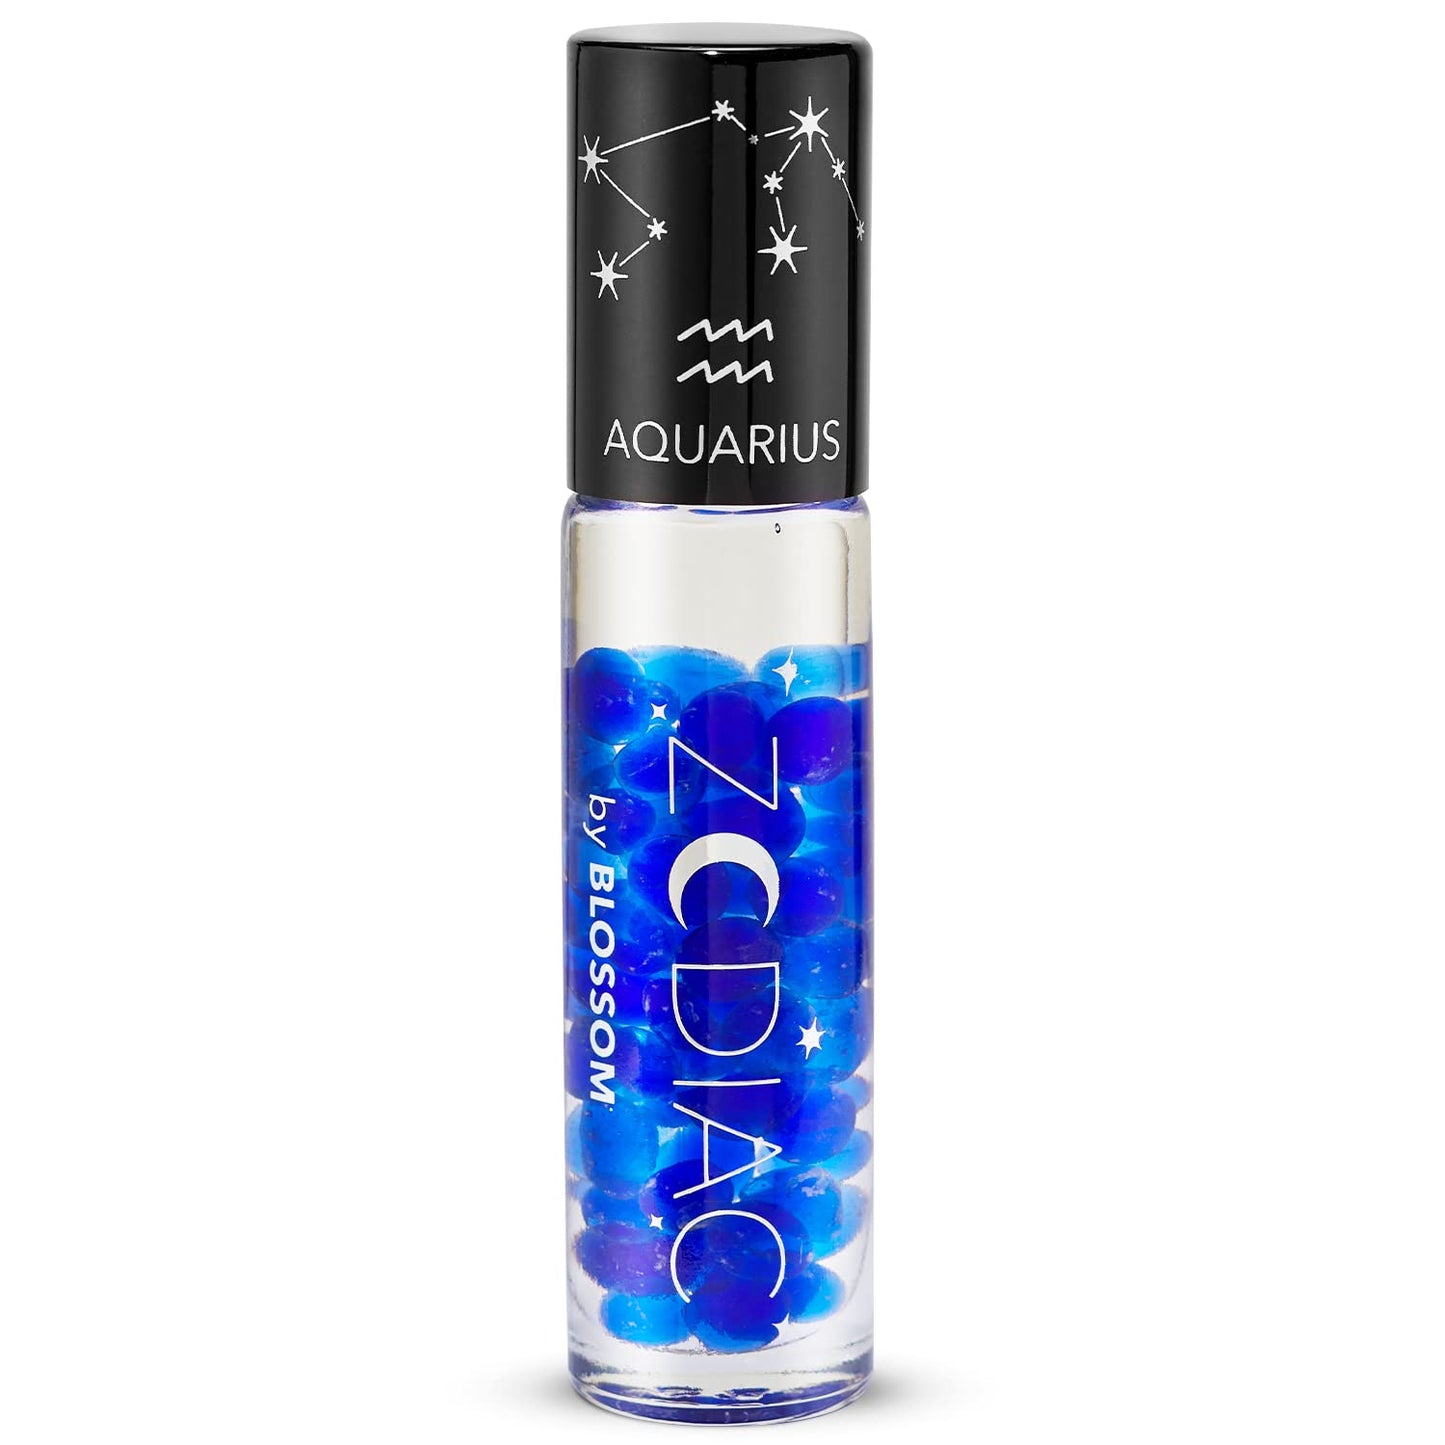 Crystal Infused Zodiac Vanilla-Flavored Roll-On Lip Gloss - Aquarius